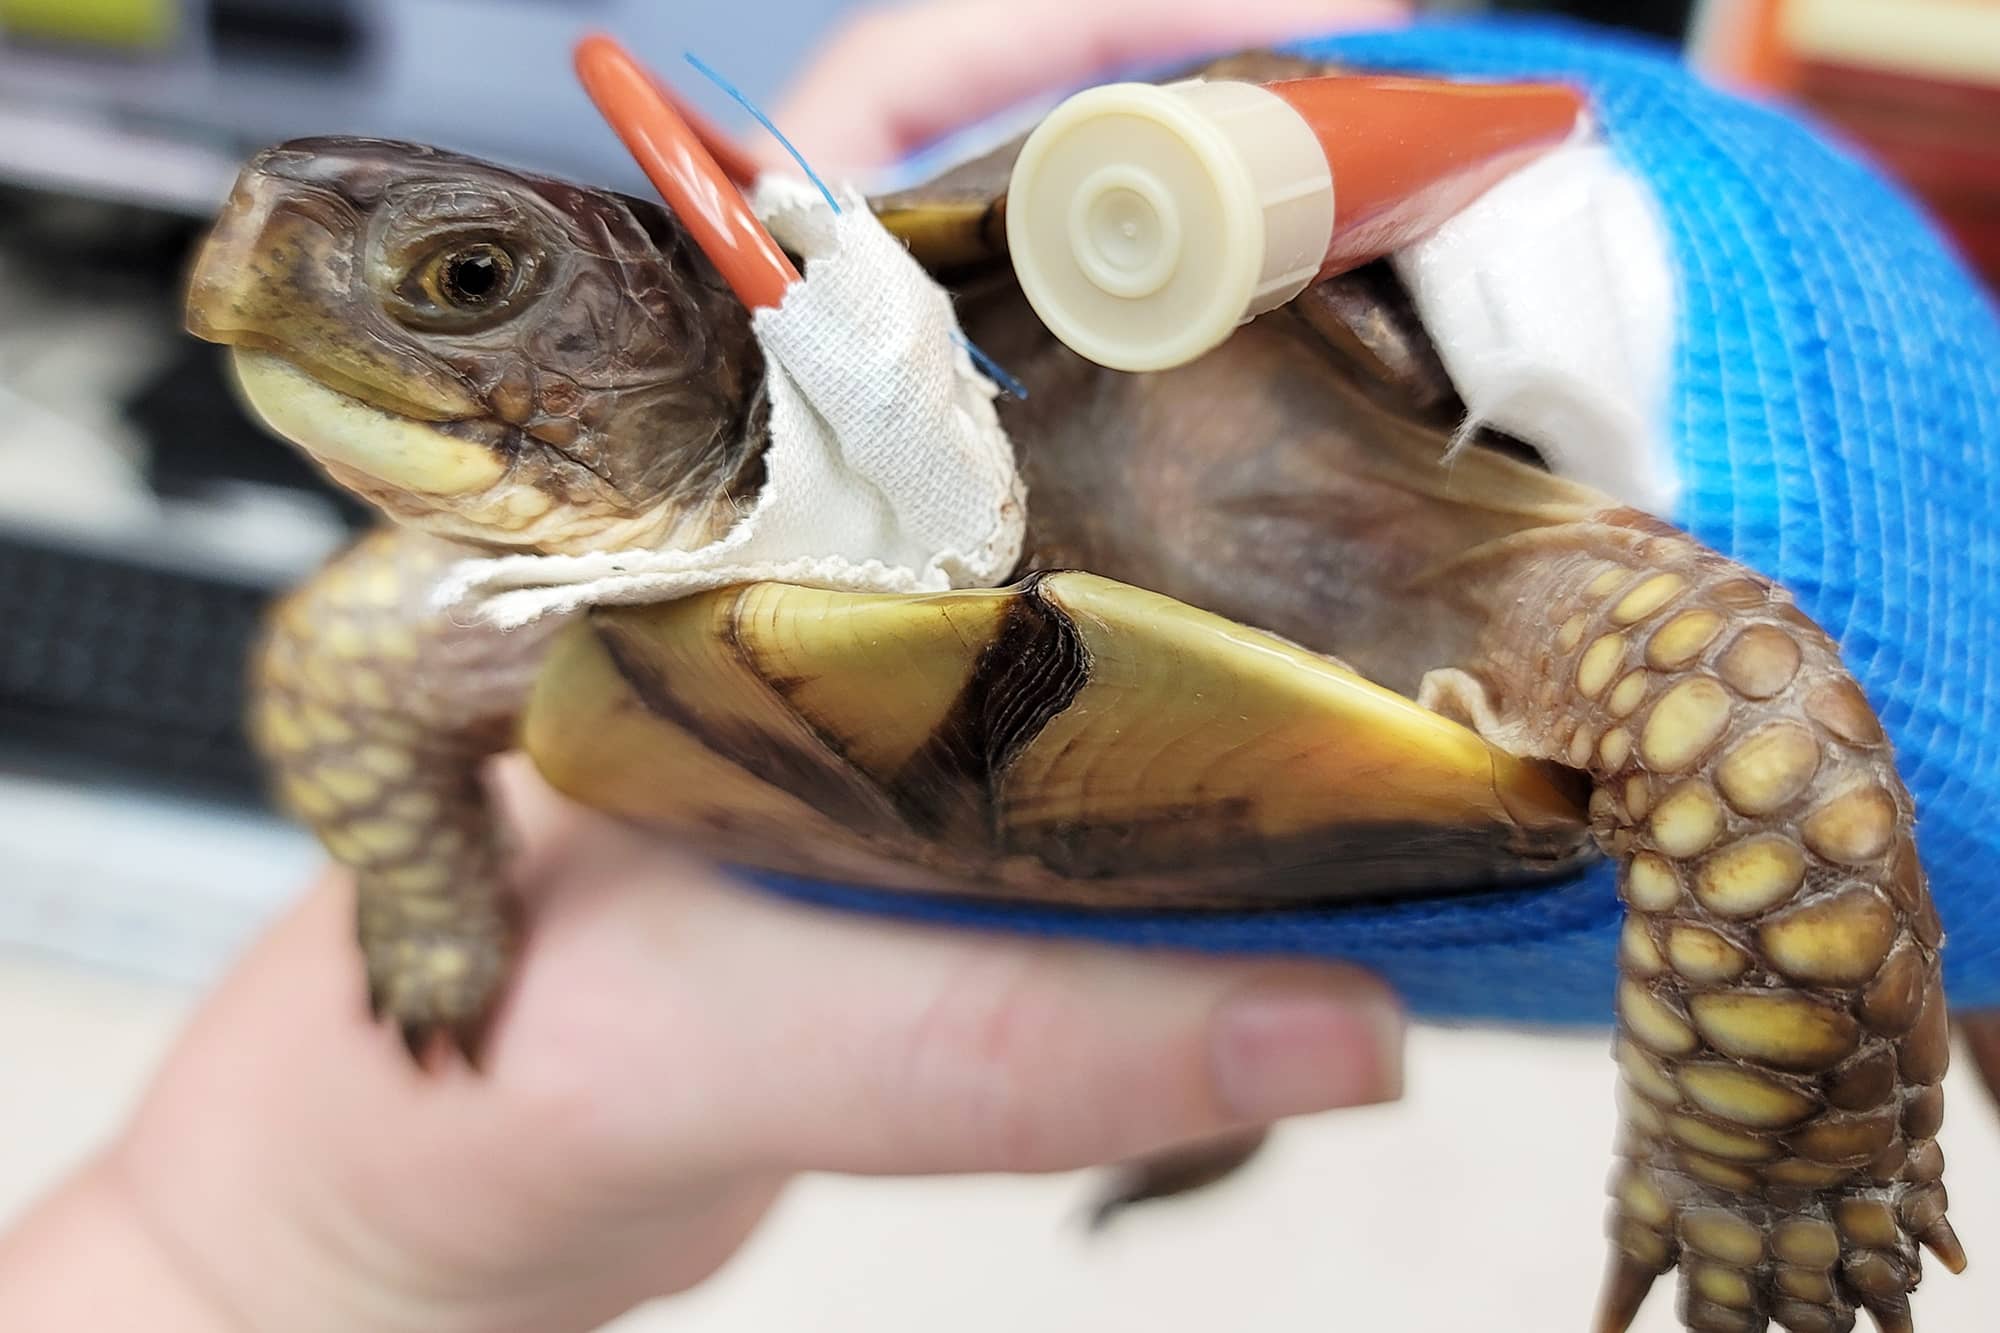 Turtle with feeding tube